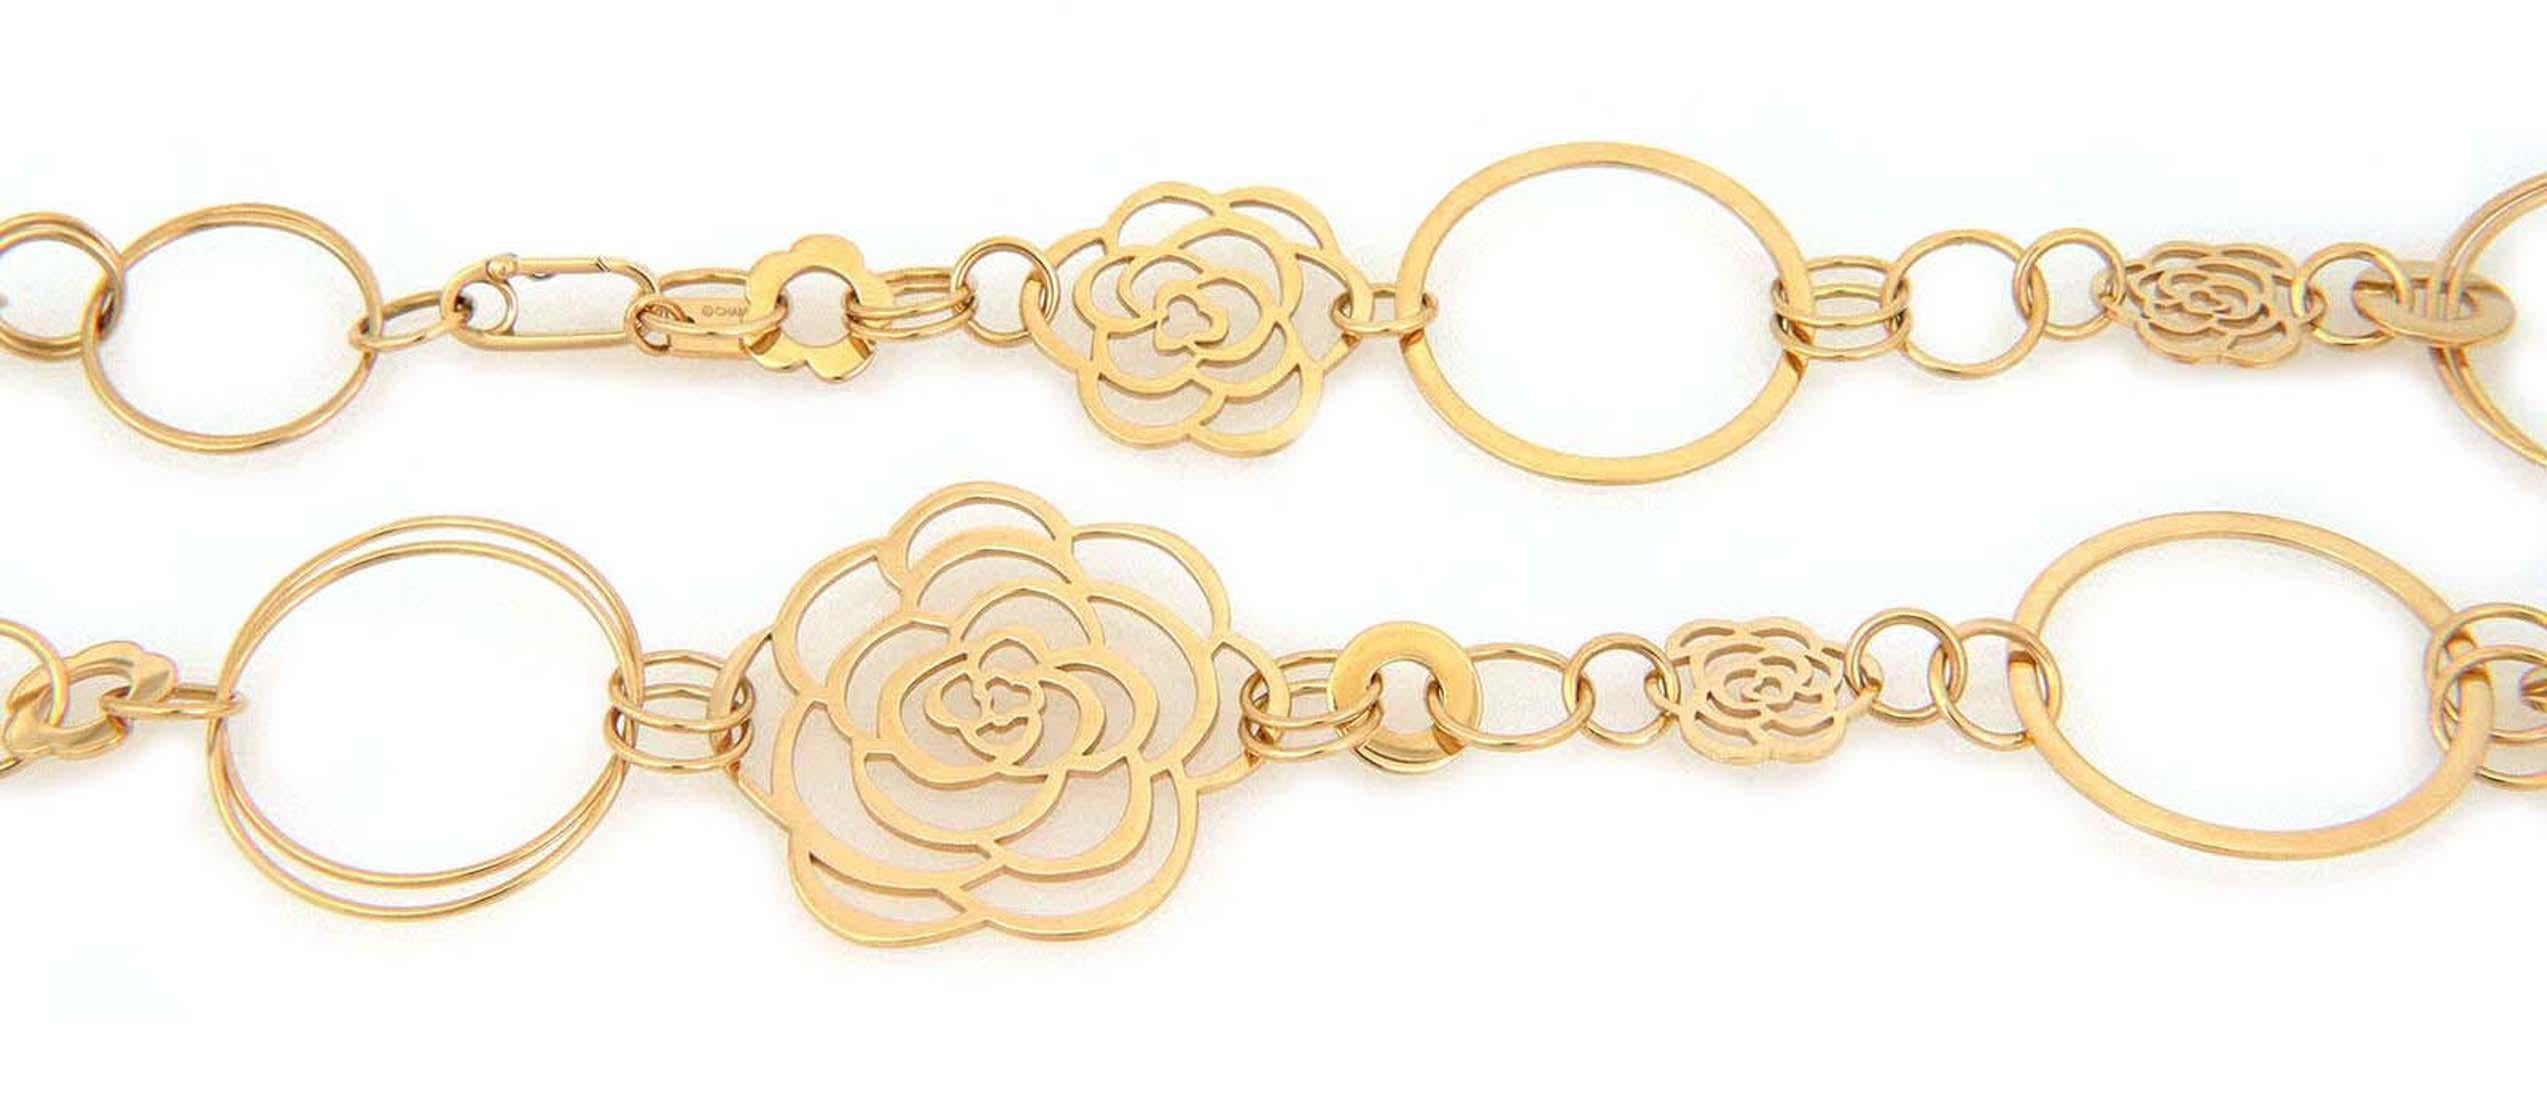 Chanel Camellia 18k Yellow Gold Flower & Hoop Motif Necklace & Bracelet Set For Sale 4